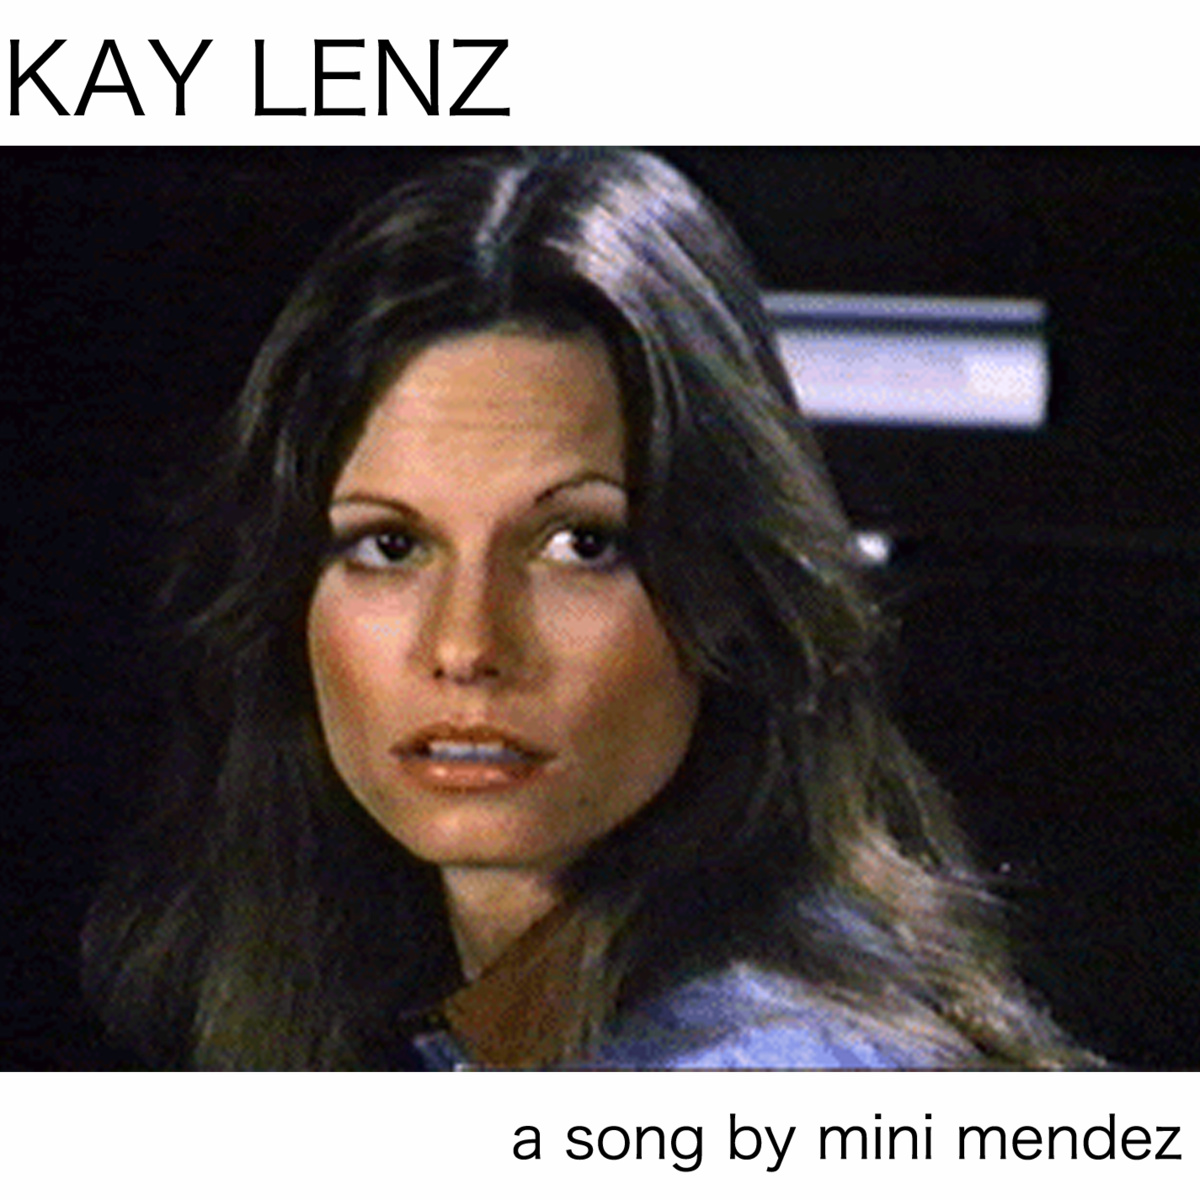 More Pictures Of Kay Lenz. kay lenz scandal. 